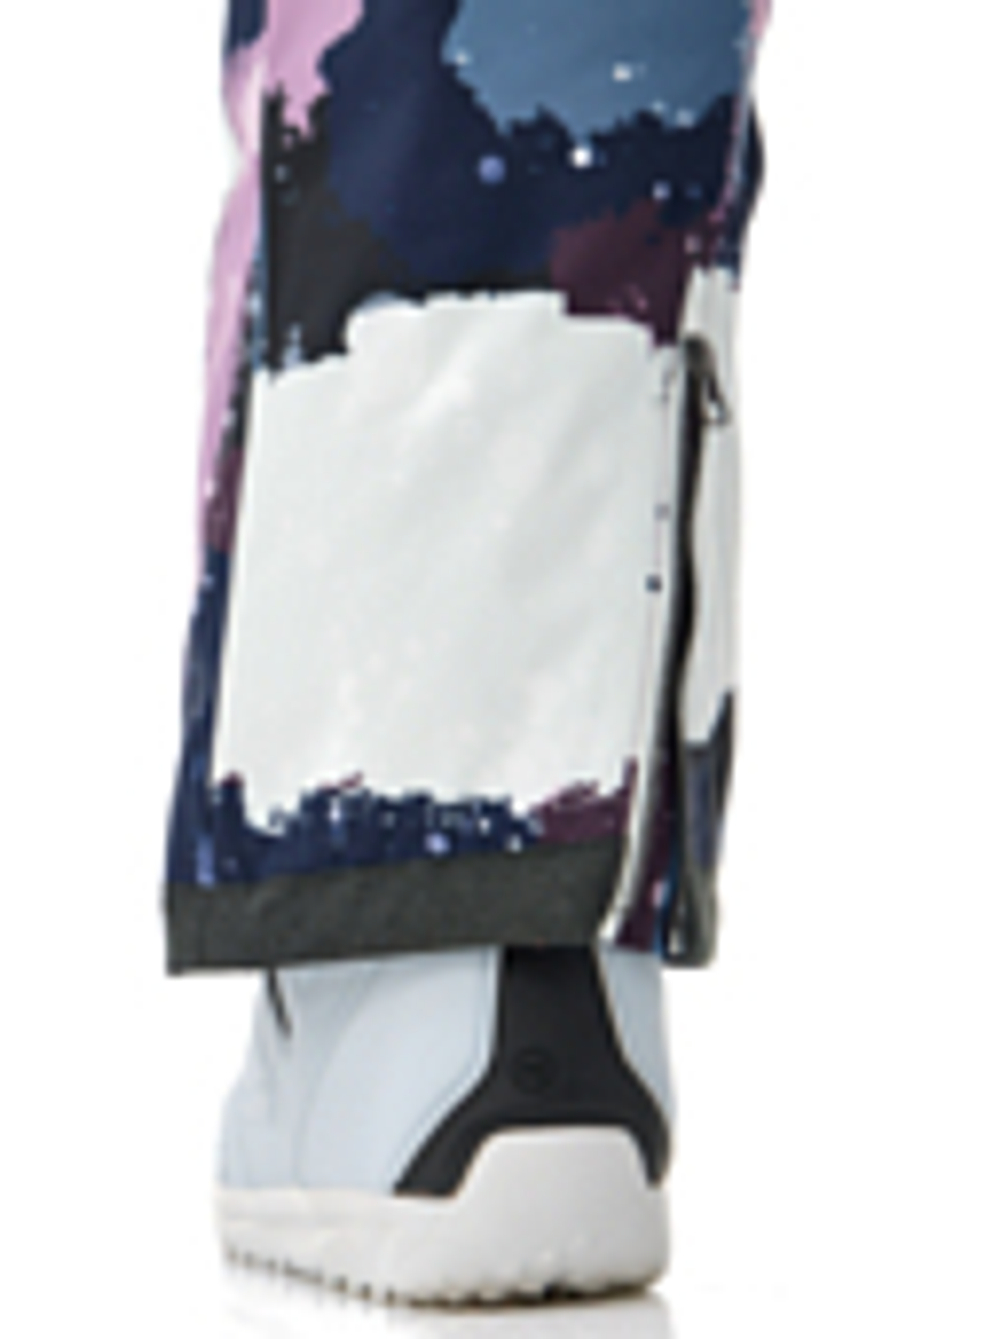 Комбинезон сноубордический Rehall Livia-R Camo Abstract Lavender (US:L)